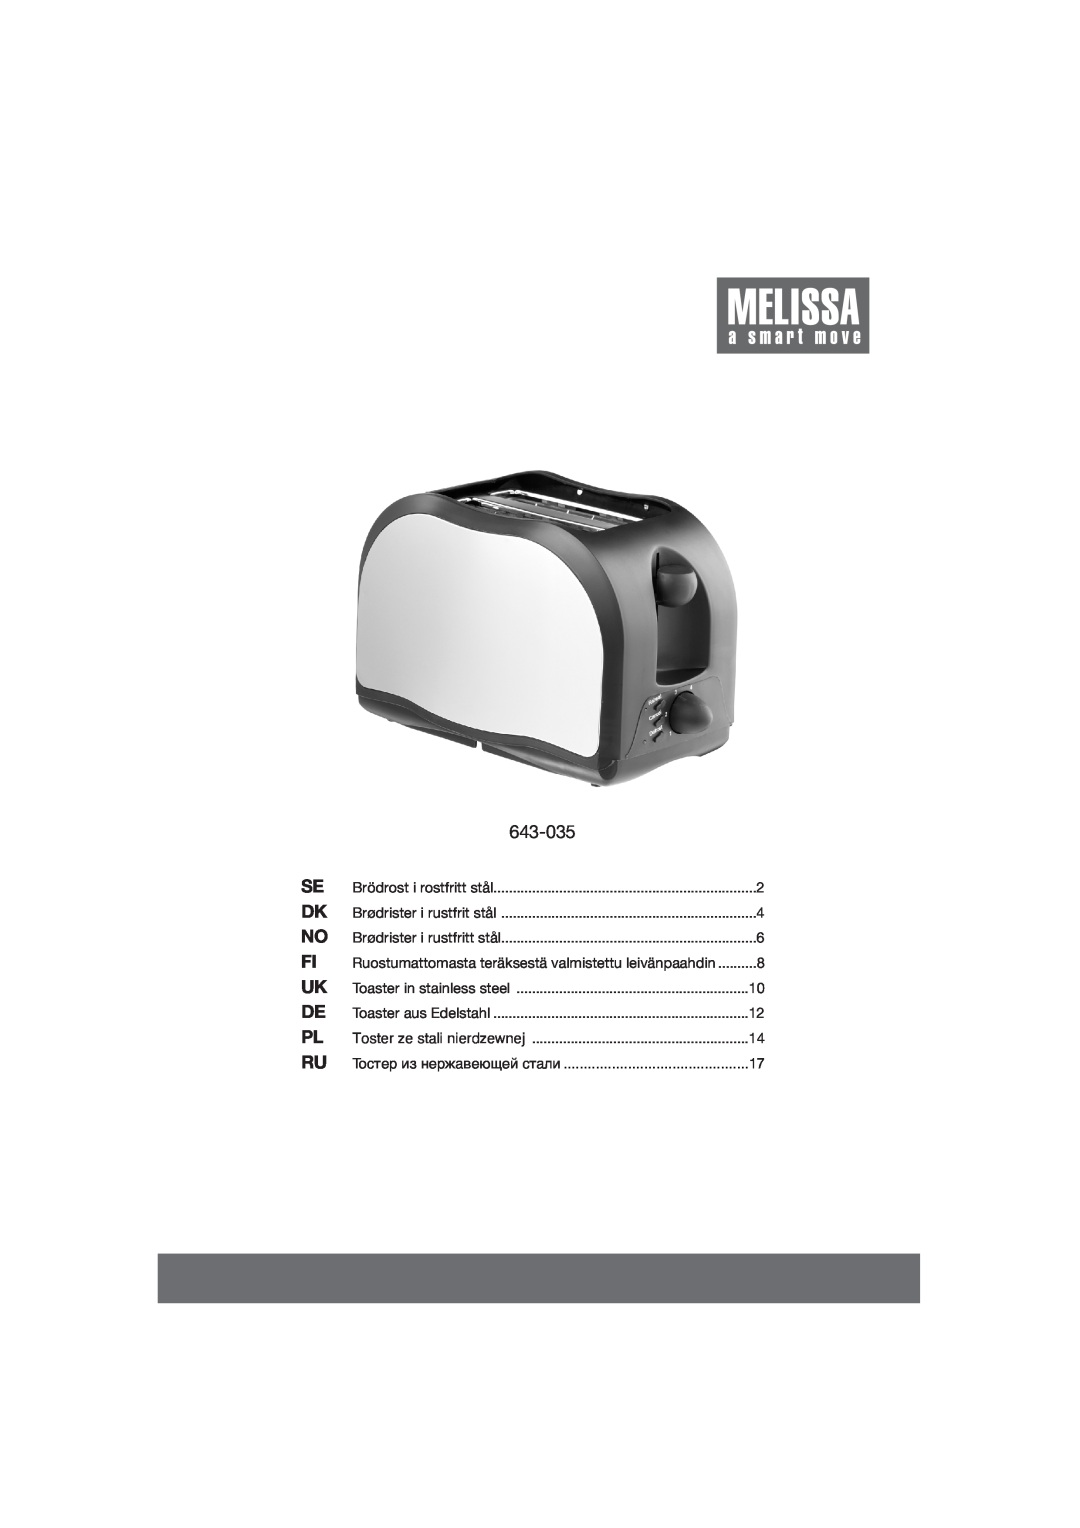 Melissa 643-035 manual Toaster in stainless steel, Toaster aus Edelstahl, Toster ze stali nierdzewnej 